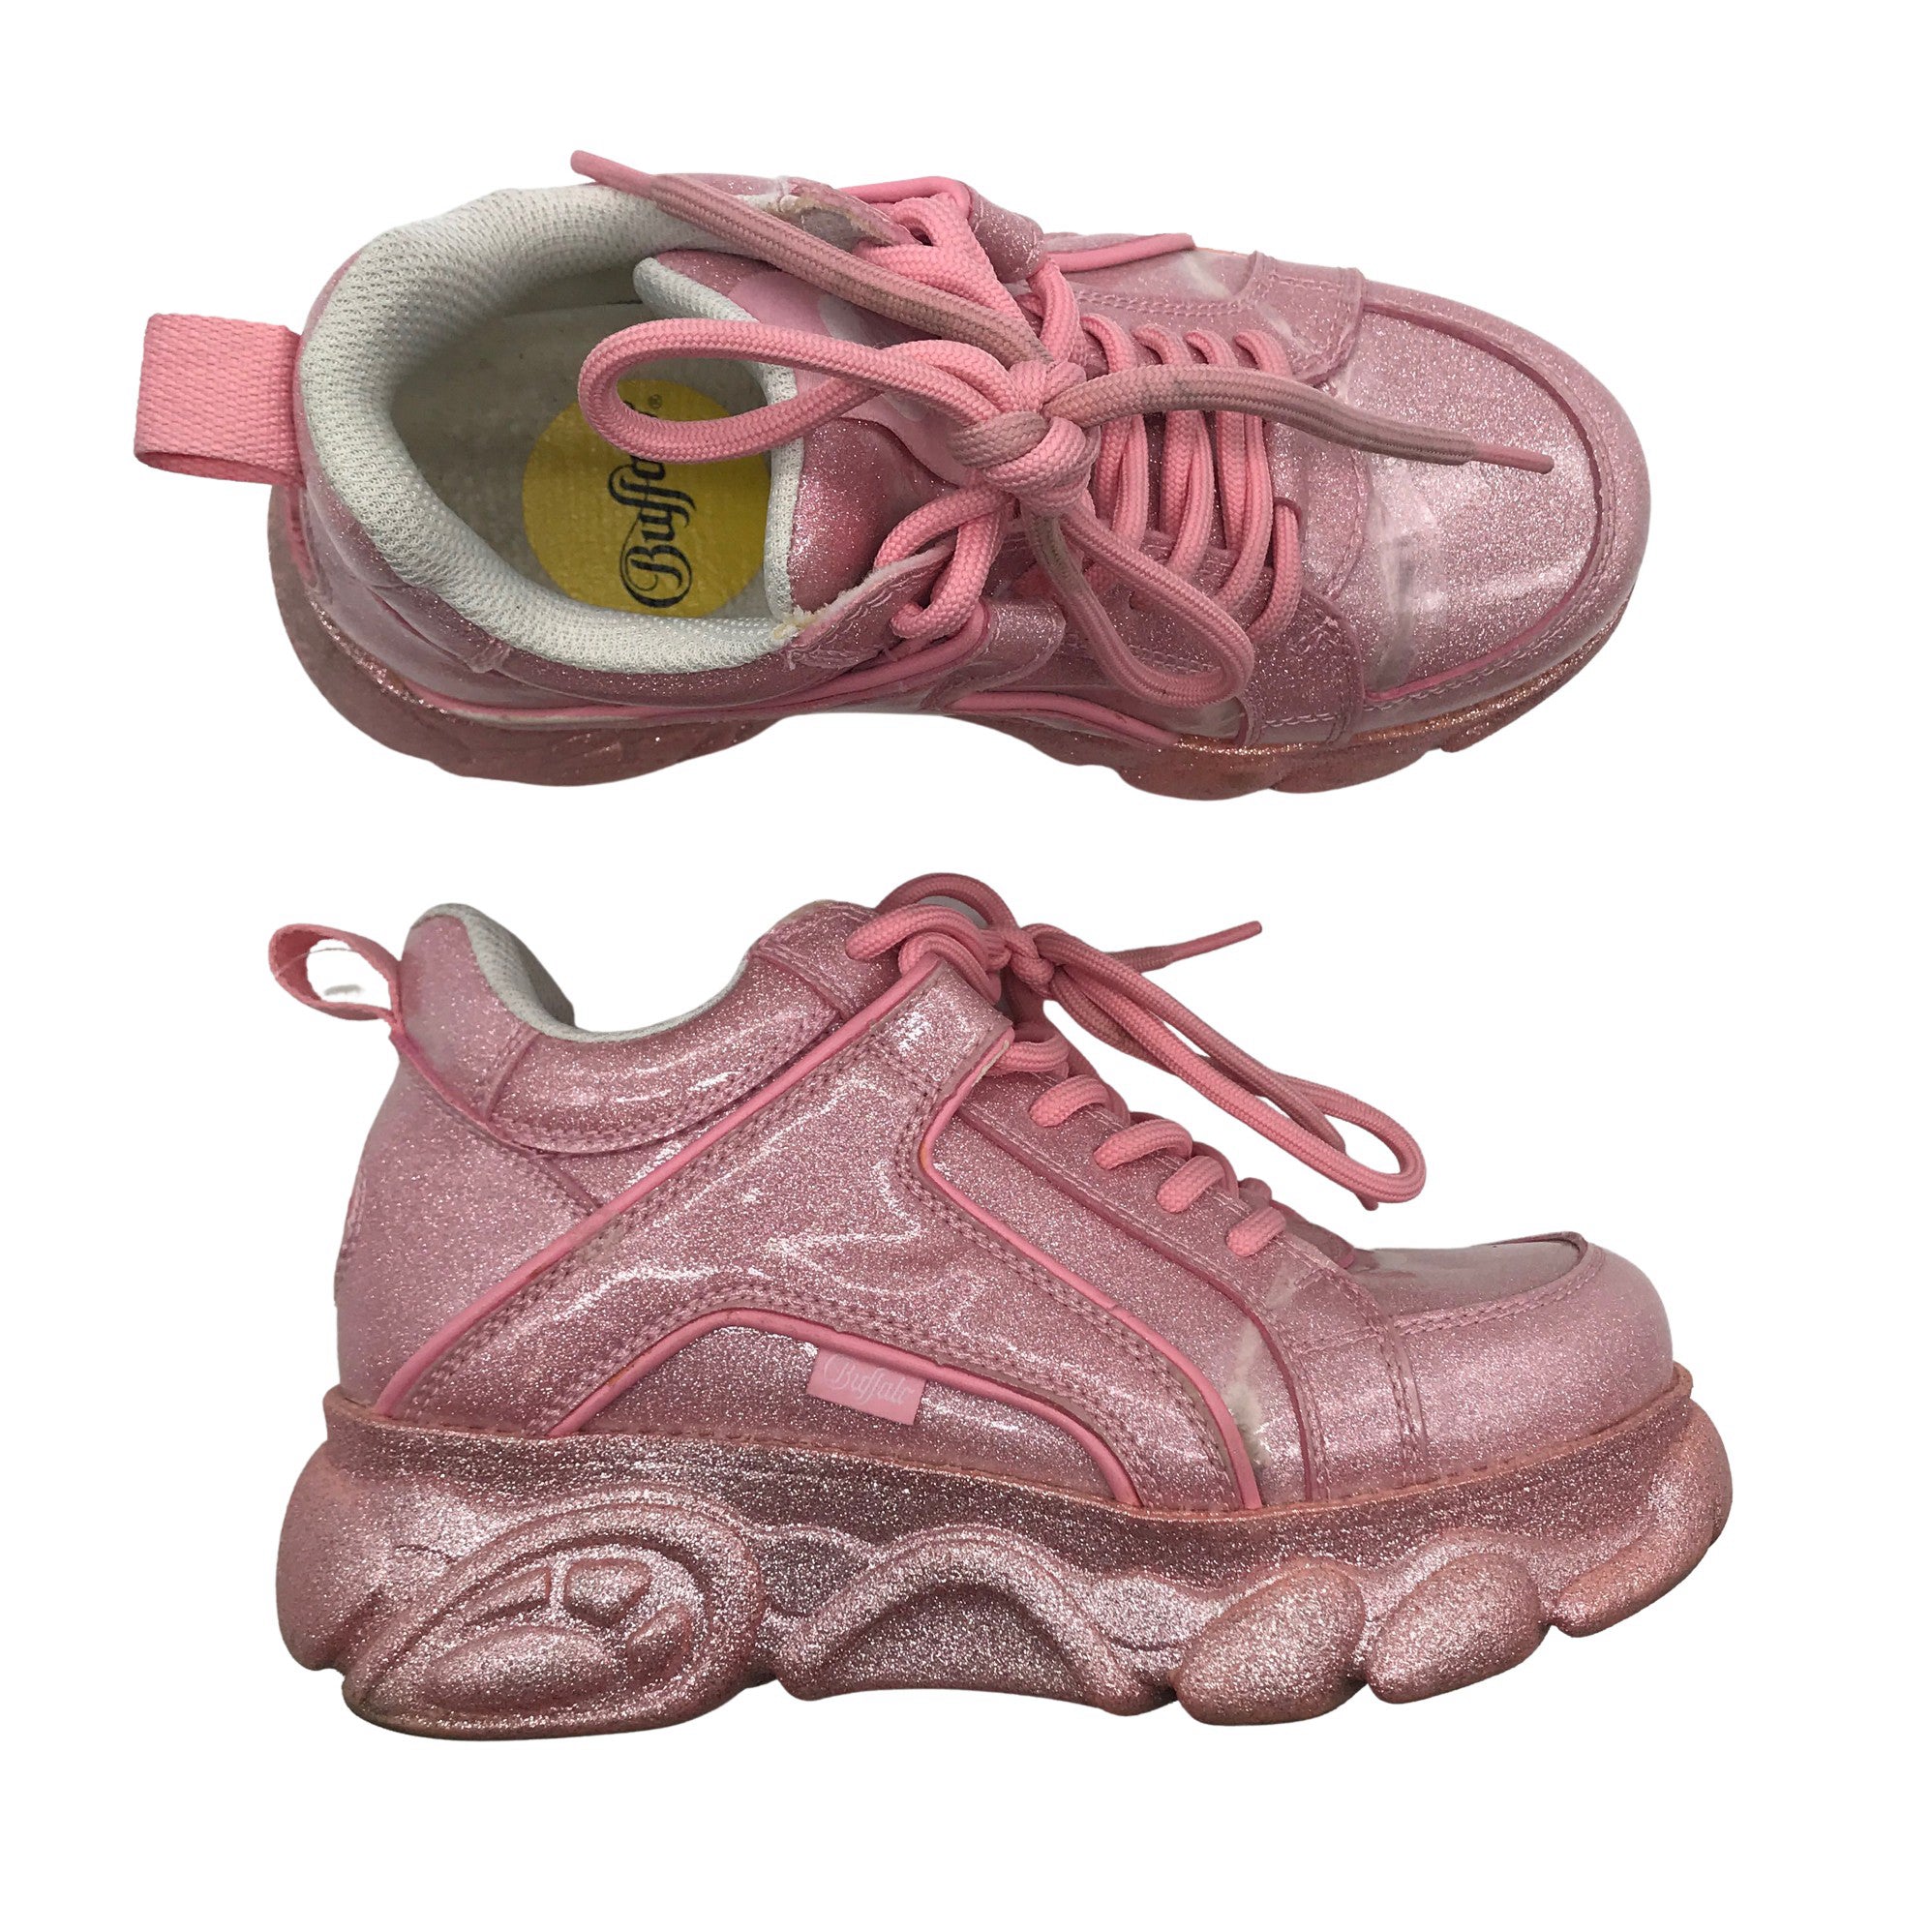 Buffalo CLD Run JOG sneakers for Women - Pink in UAE | Level Shoes